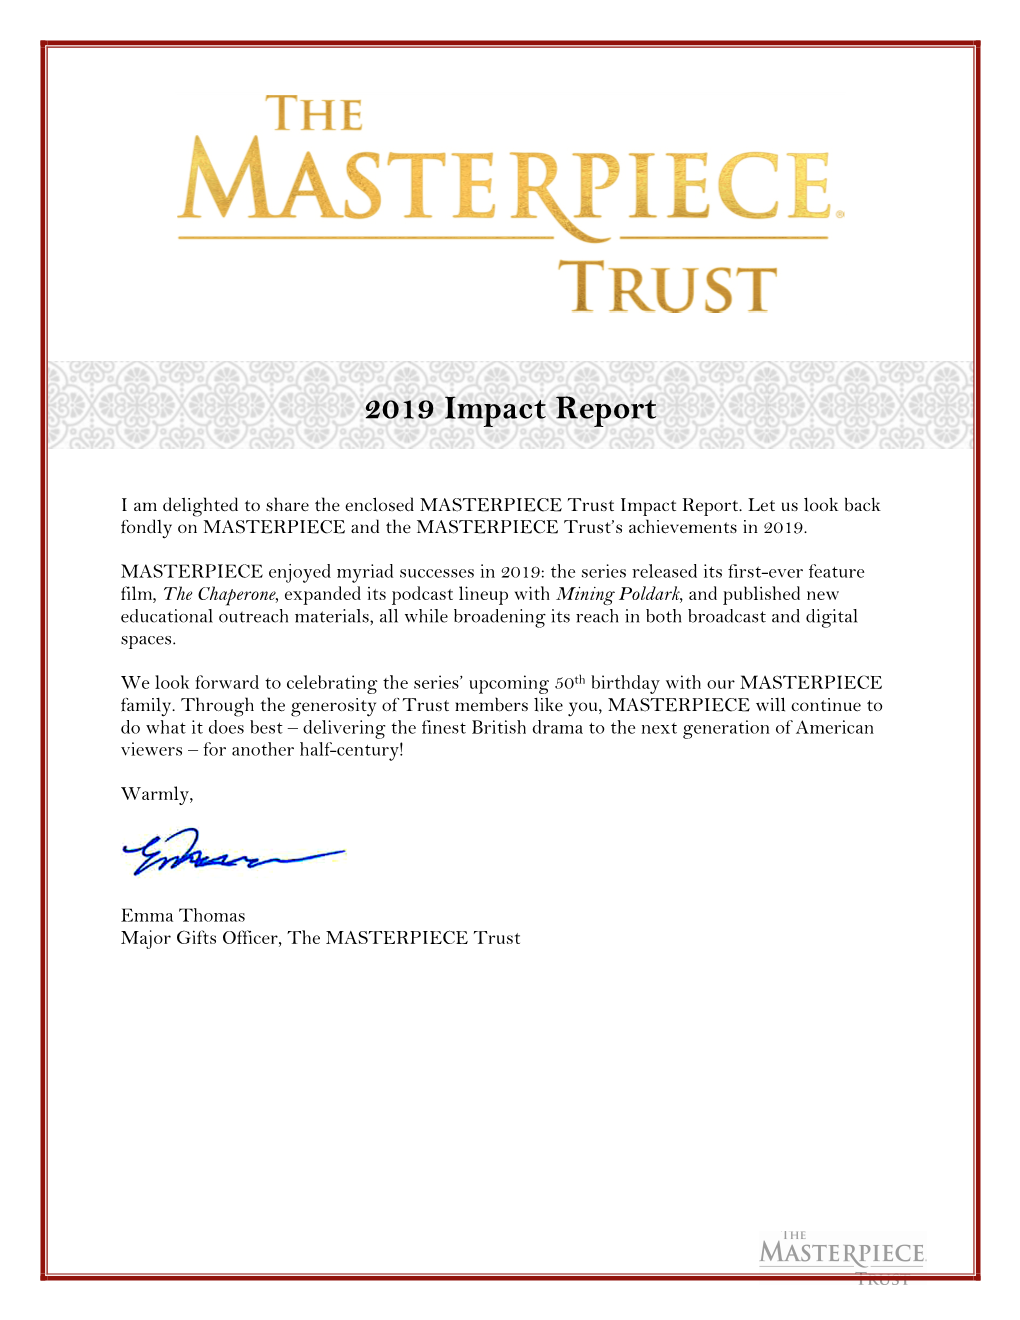 Masterpiece Trust 2019 Impact Report.Docx